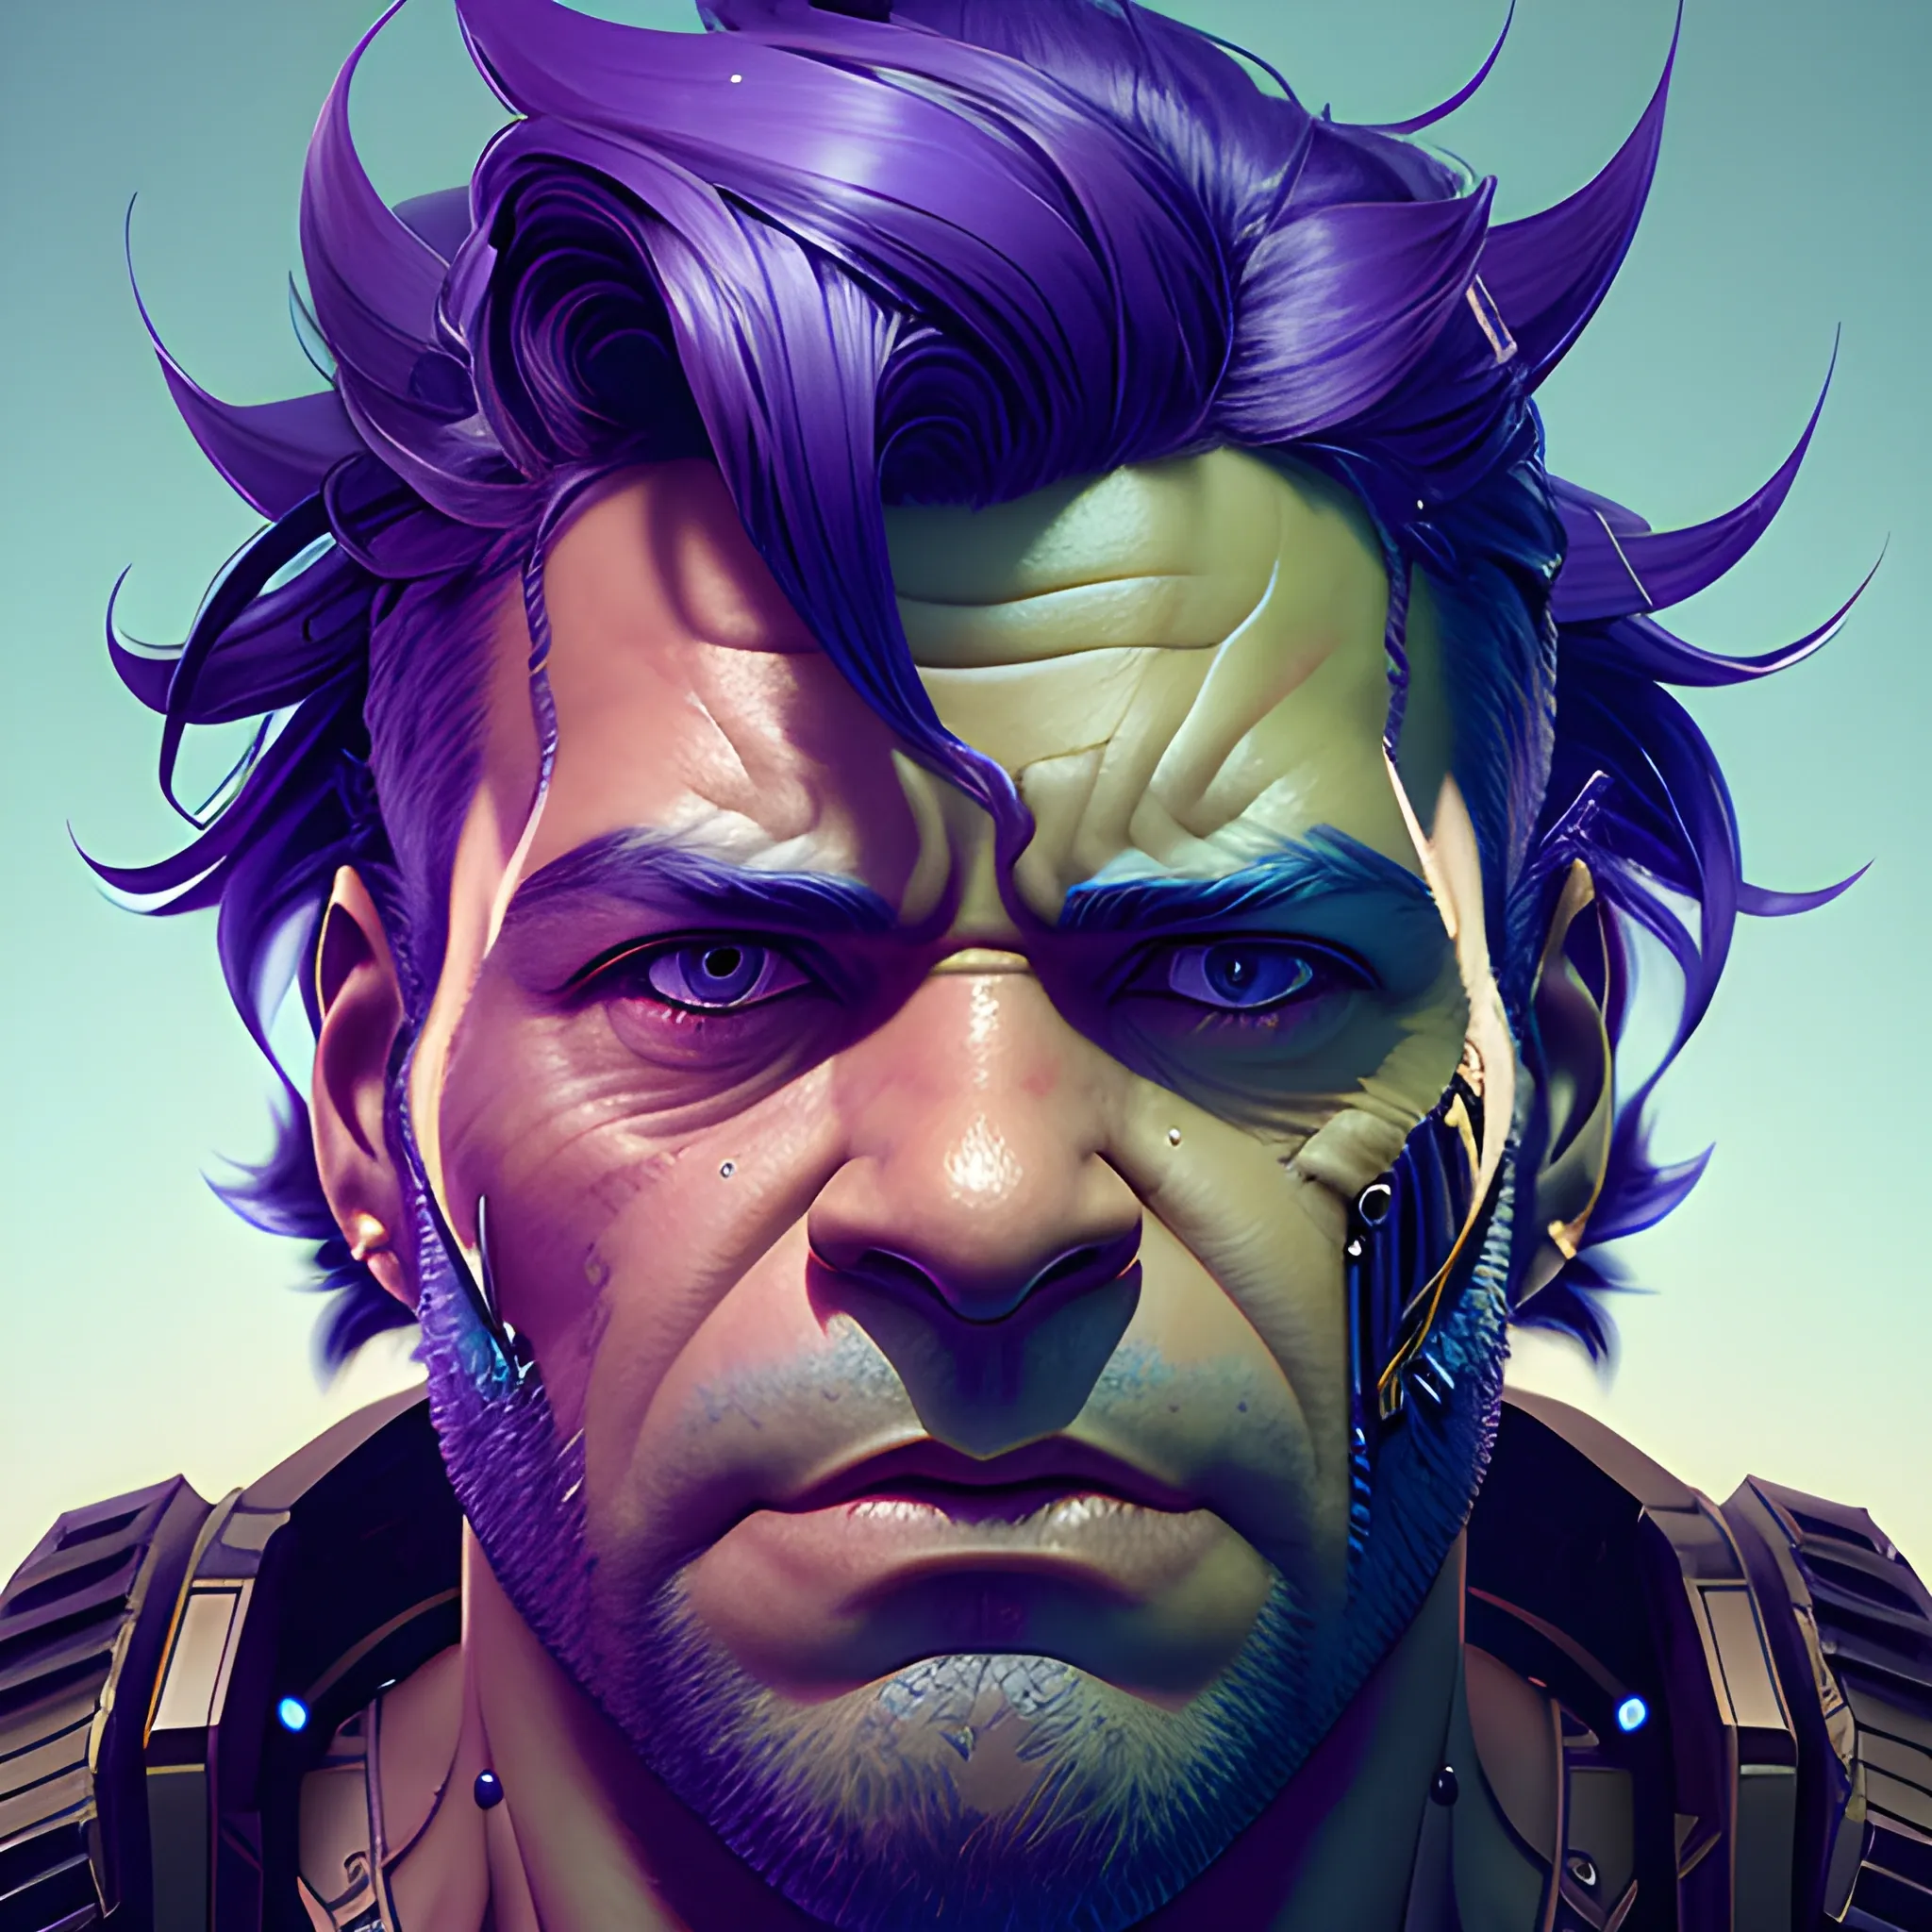 a beautiful portrait of a cute cyberpunk male Hulk by sandra chevrier and greg rutkowski and wlop, purple blue color scheme, high key lighting, volumetric light, digital art, highly detailed, fine detail, intricate, ornate, complex, octane render, unreal engine, photorealistic 